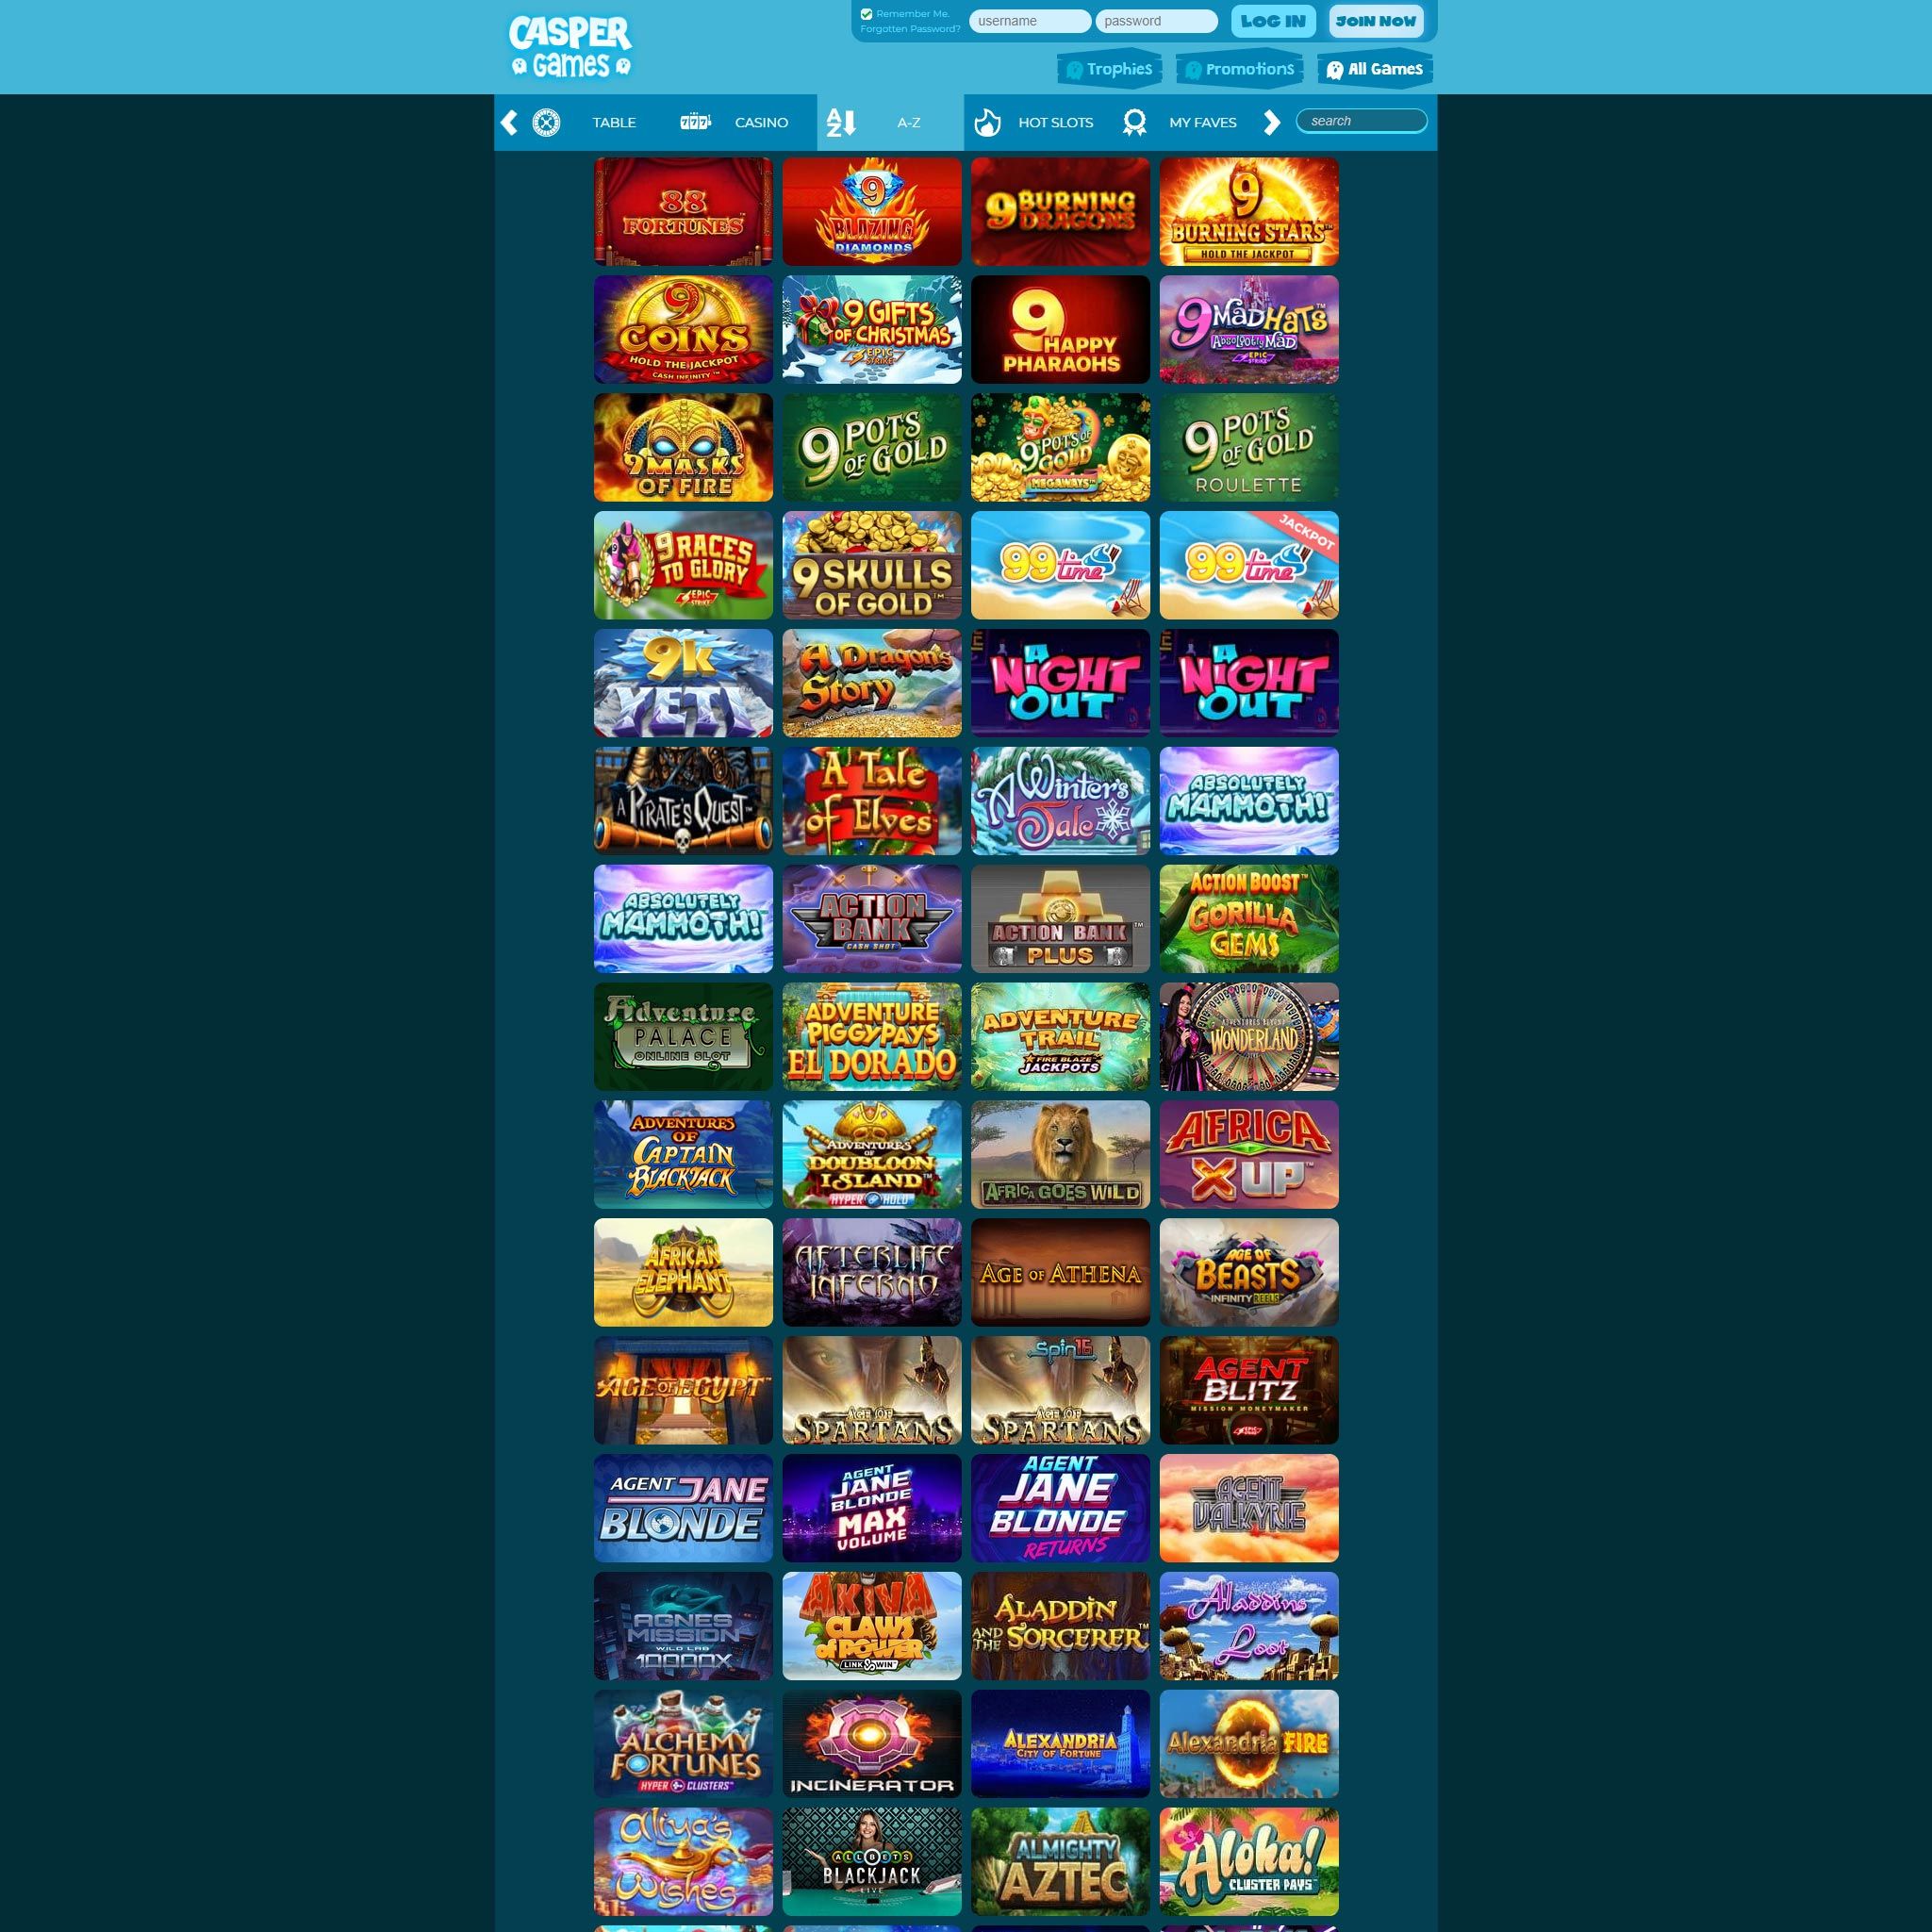 Casper Games Casino full games catalogue